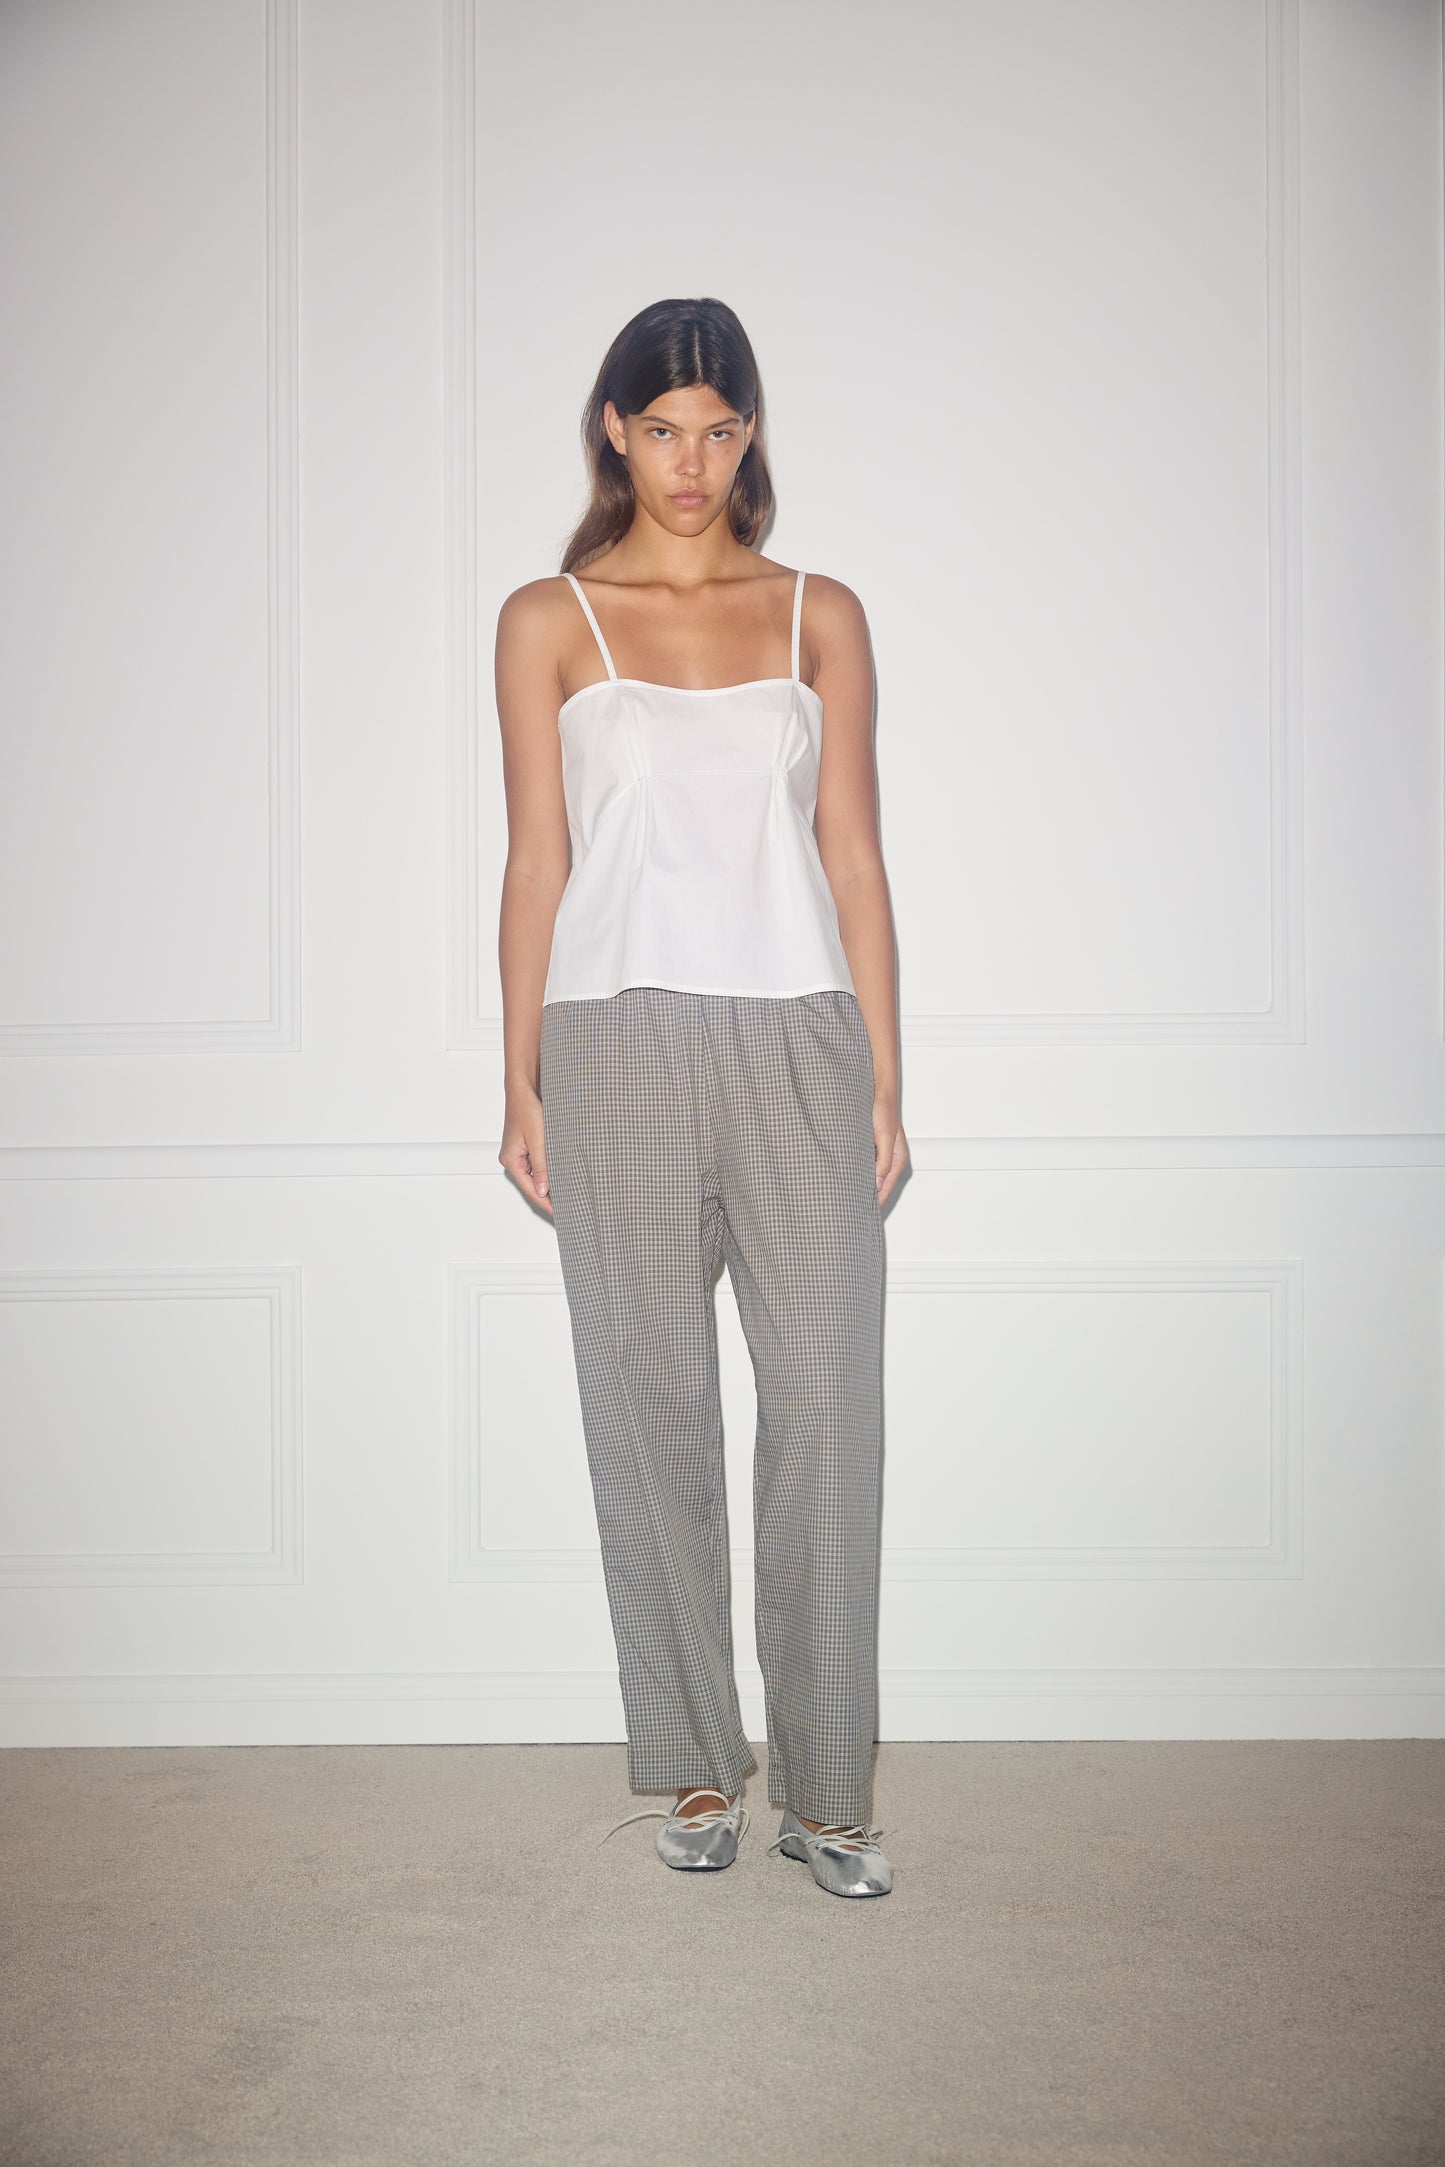 Female model wearing Pleat Top - White by Deiji Studios against plain background